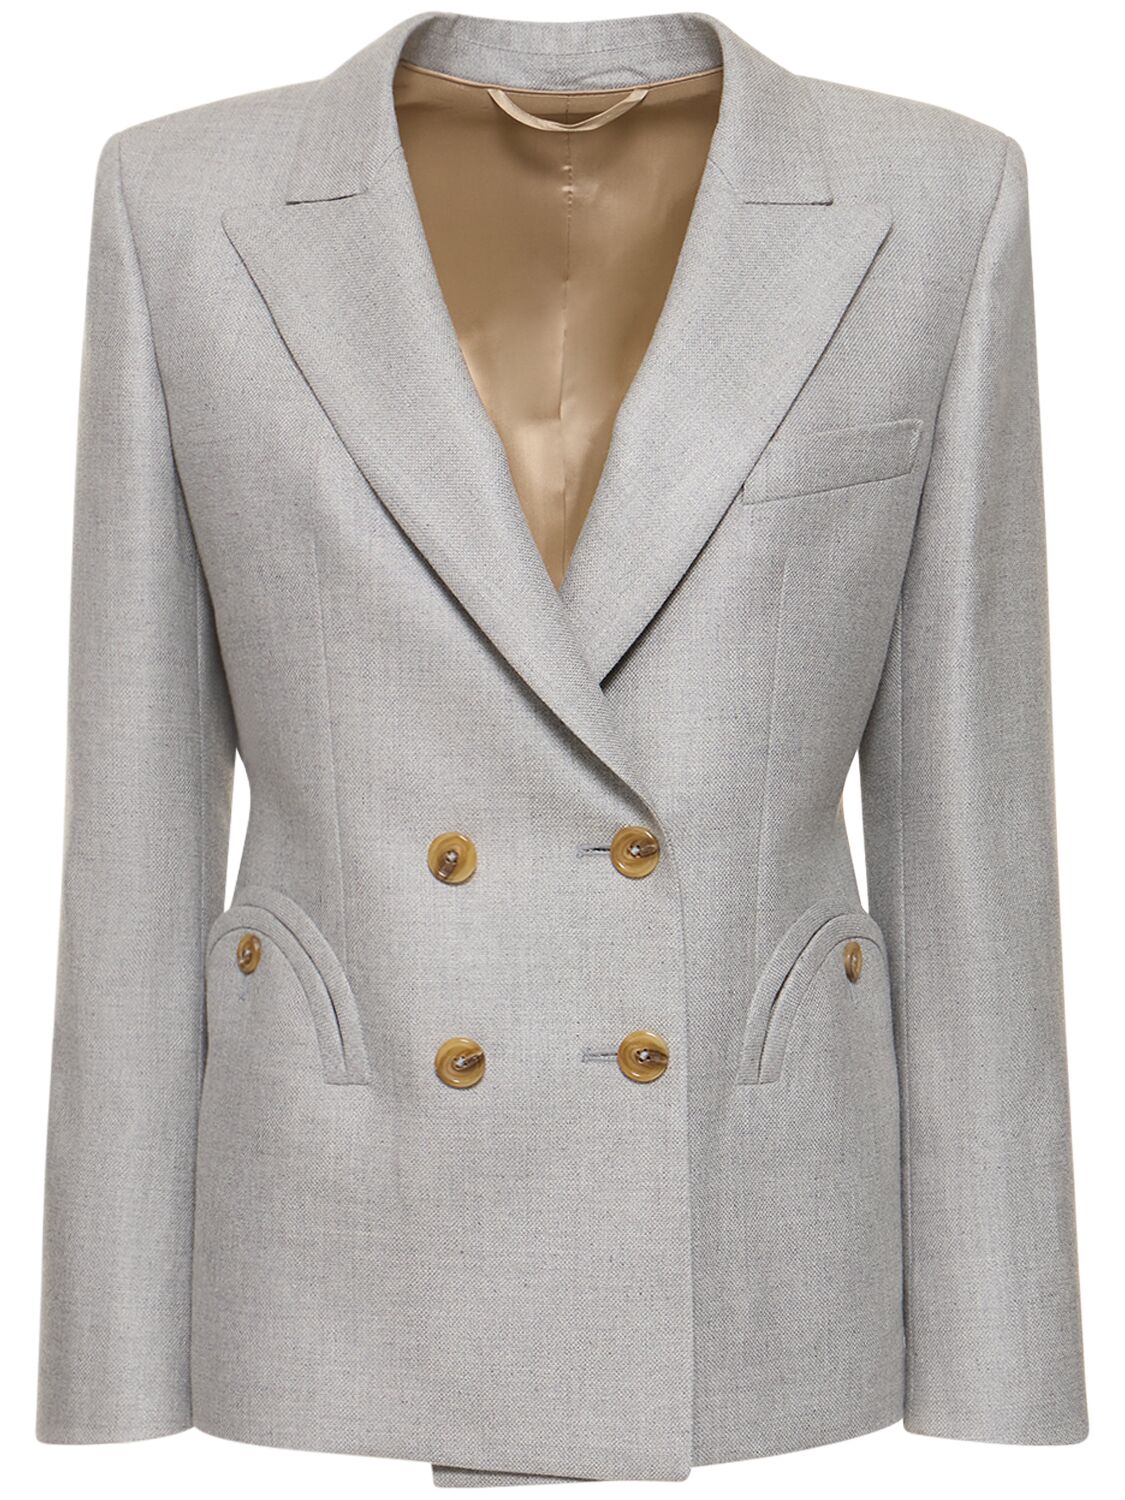 Shop Blazé Milano Alithia Stone Charmer Silk & Wool Blazer In Grey